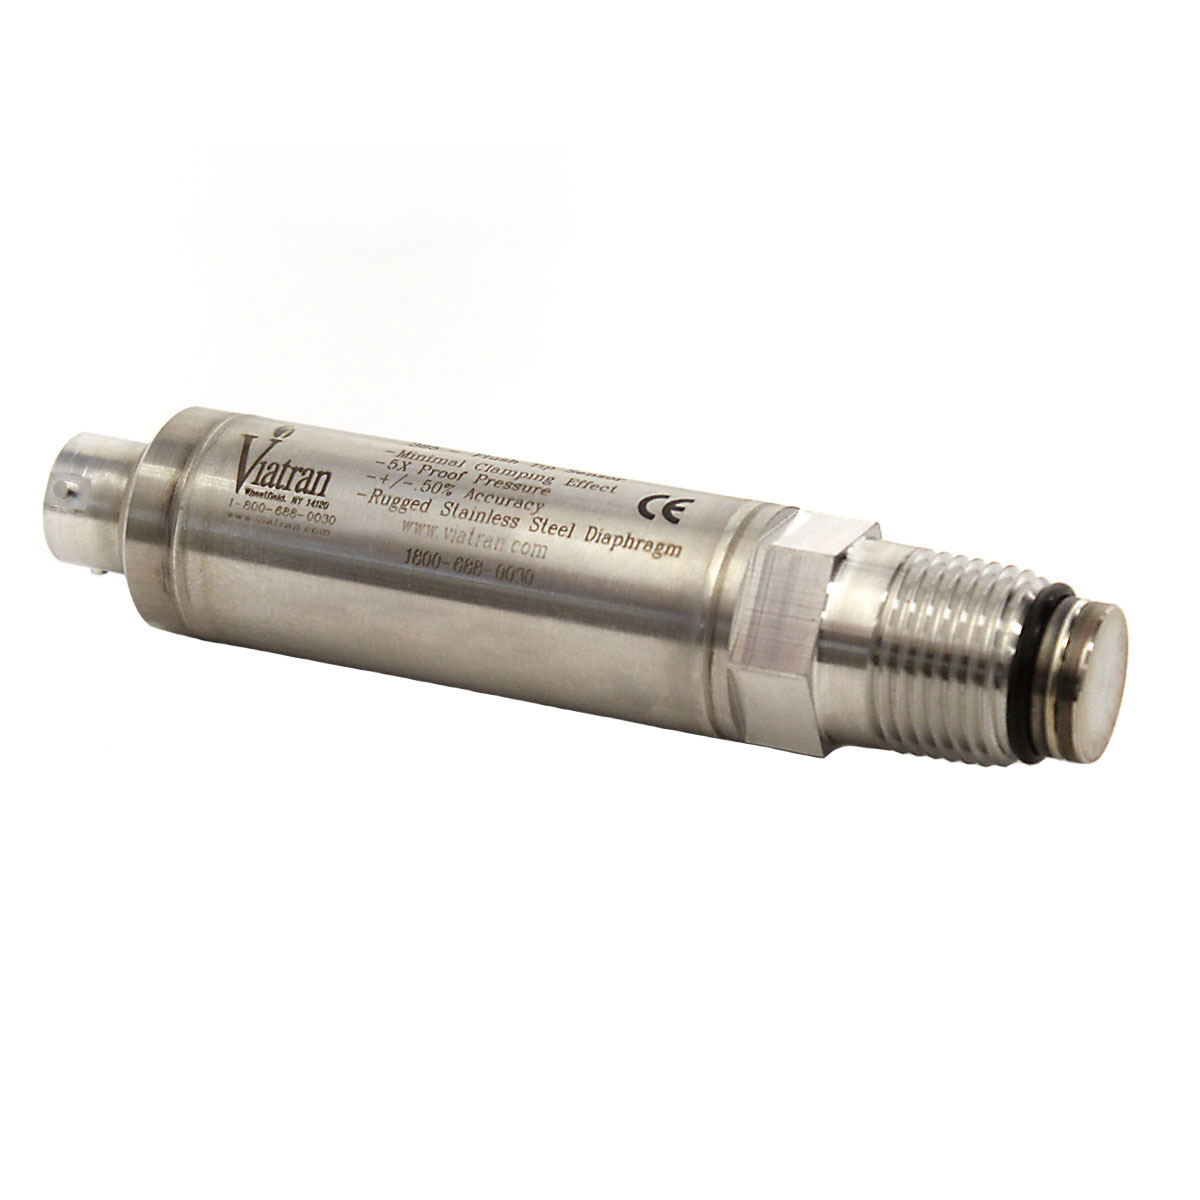 VIATRAN 385AUSX1839 Flush Tip Pressure Transducer 500PSIS